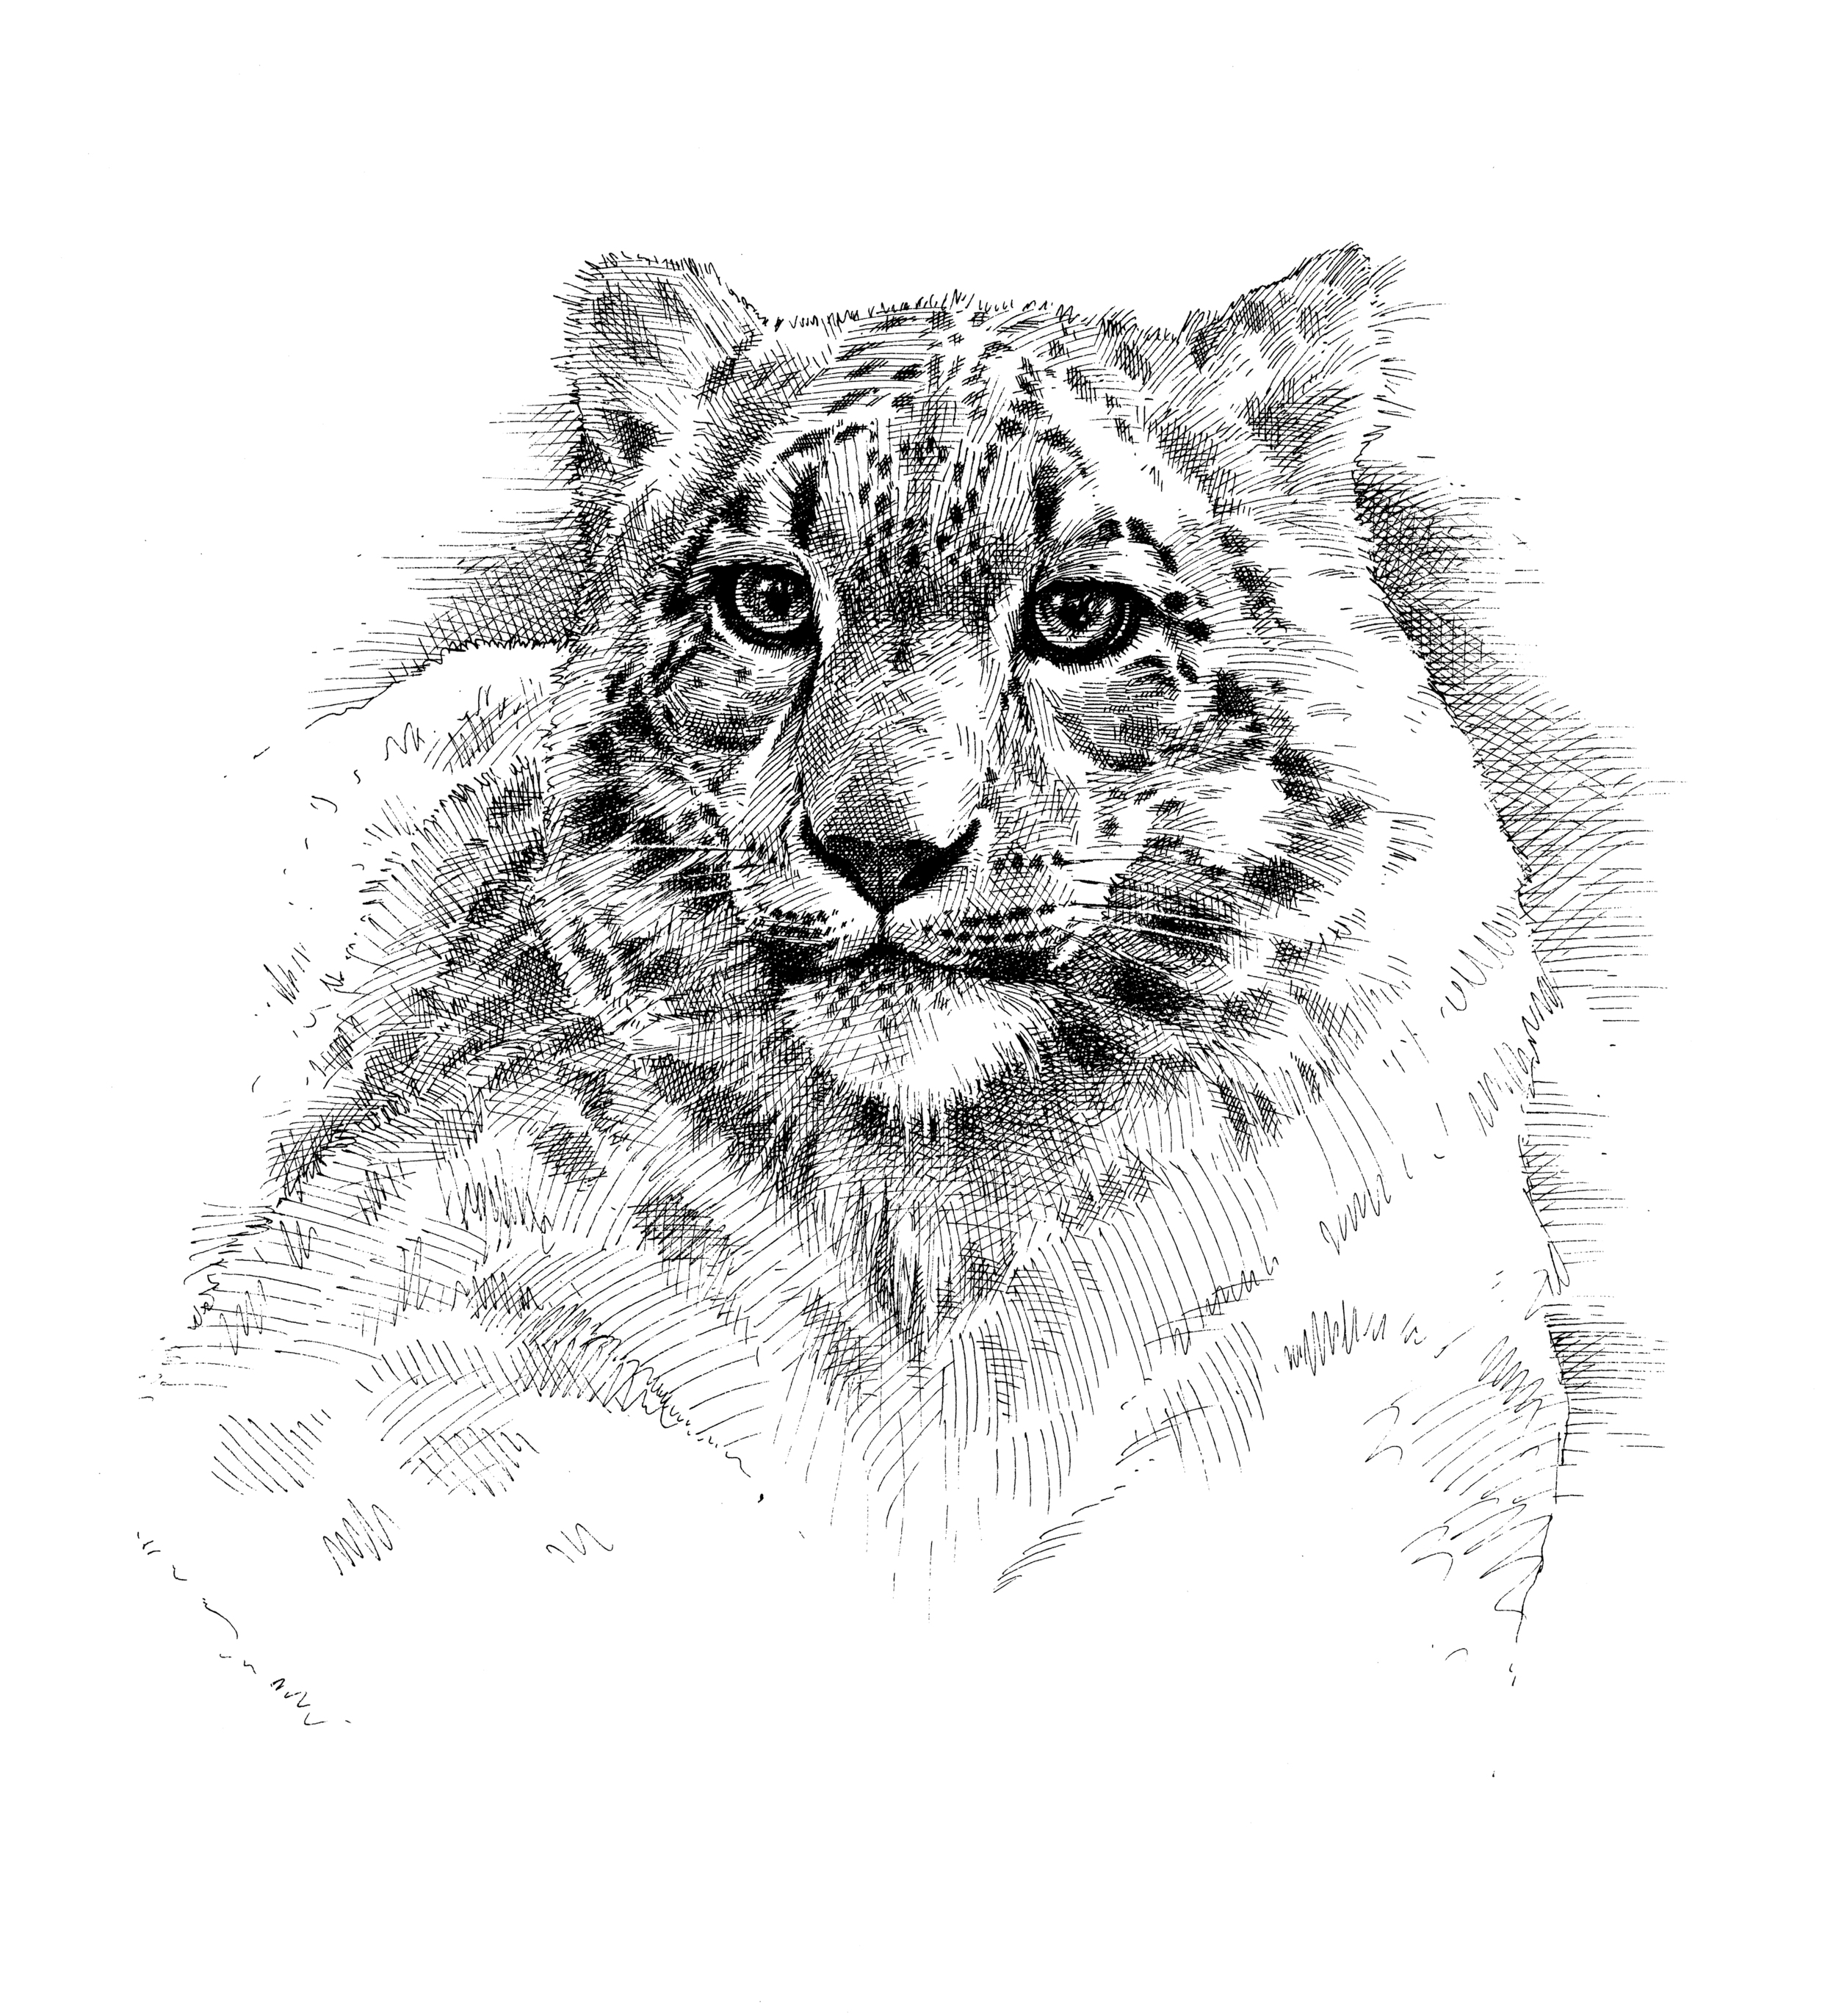 Snow Leopard finish wb.jpg